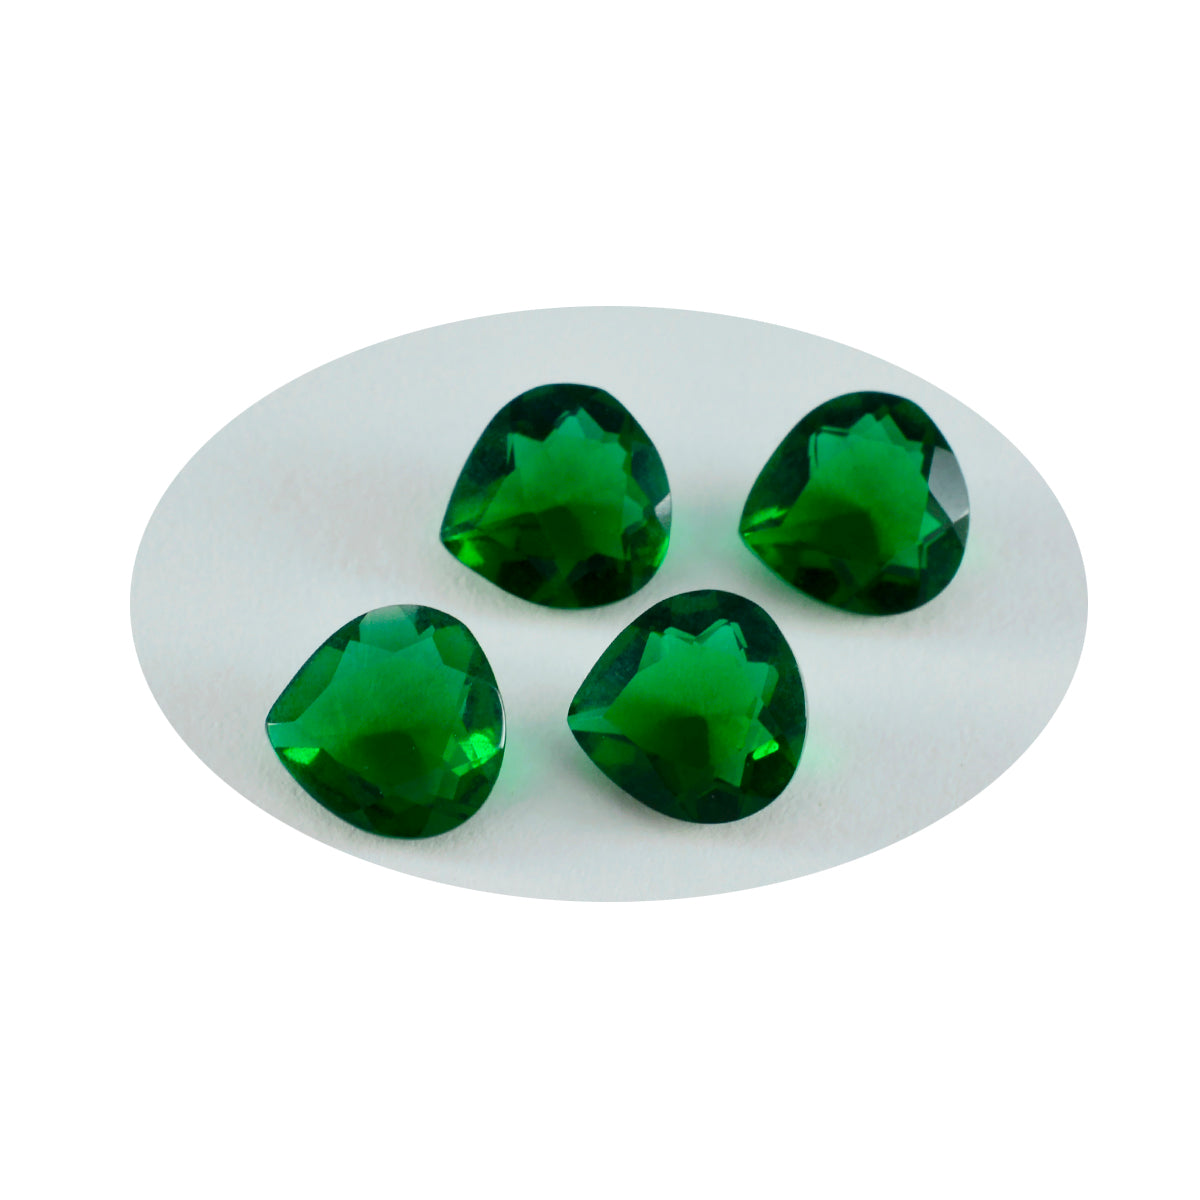 riyogems 1 st grön smaragd cz fasetterad 6x6 mm hjärtform häpnadsväckande kvalitetspärla